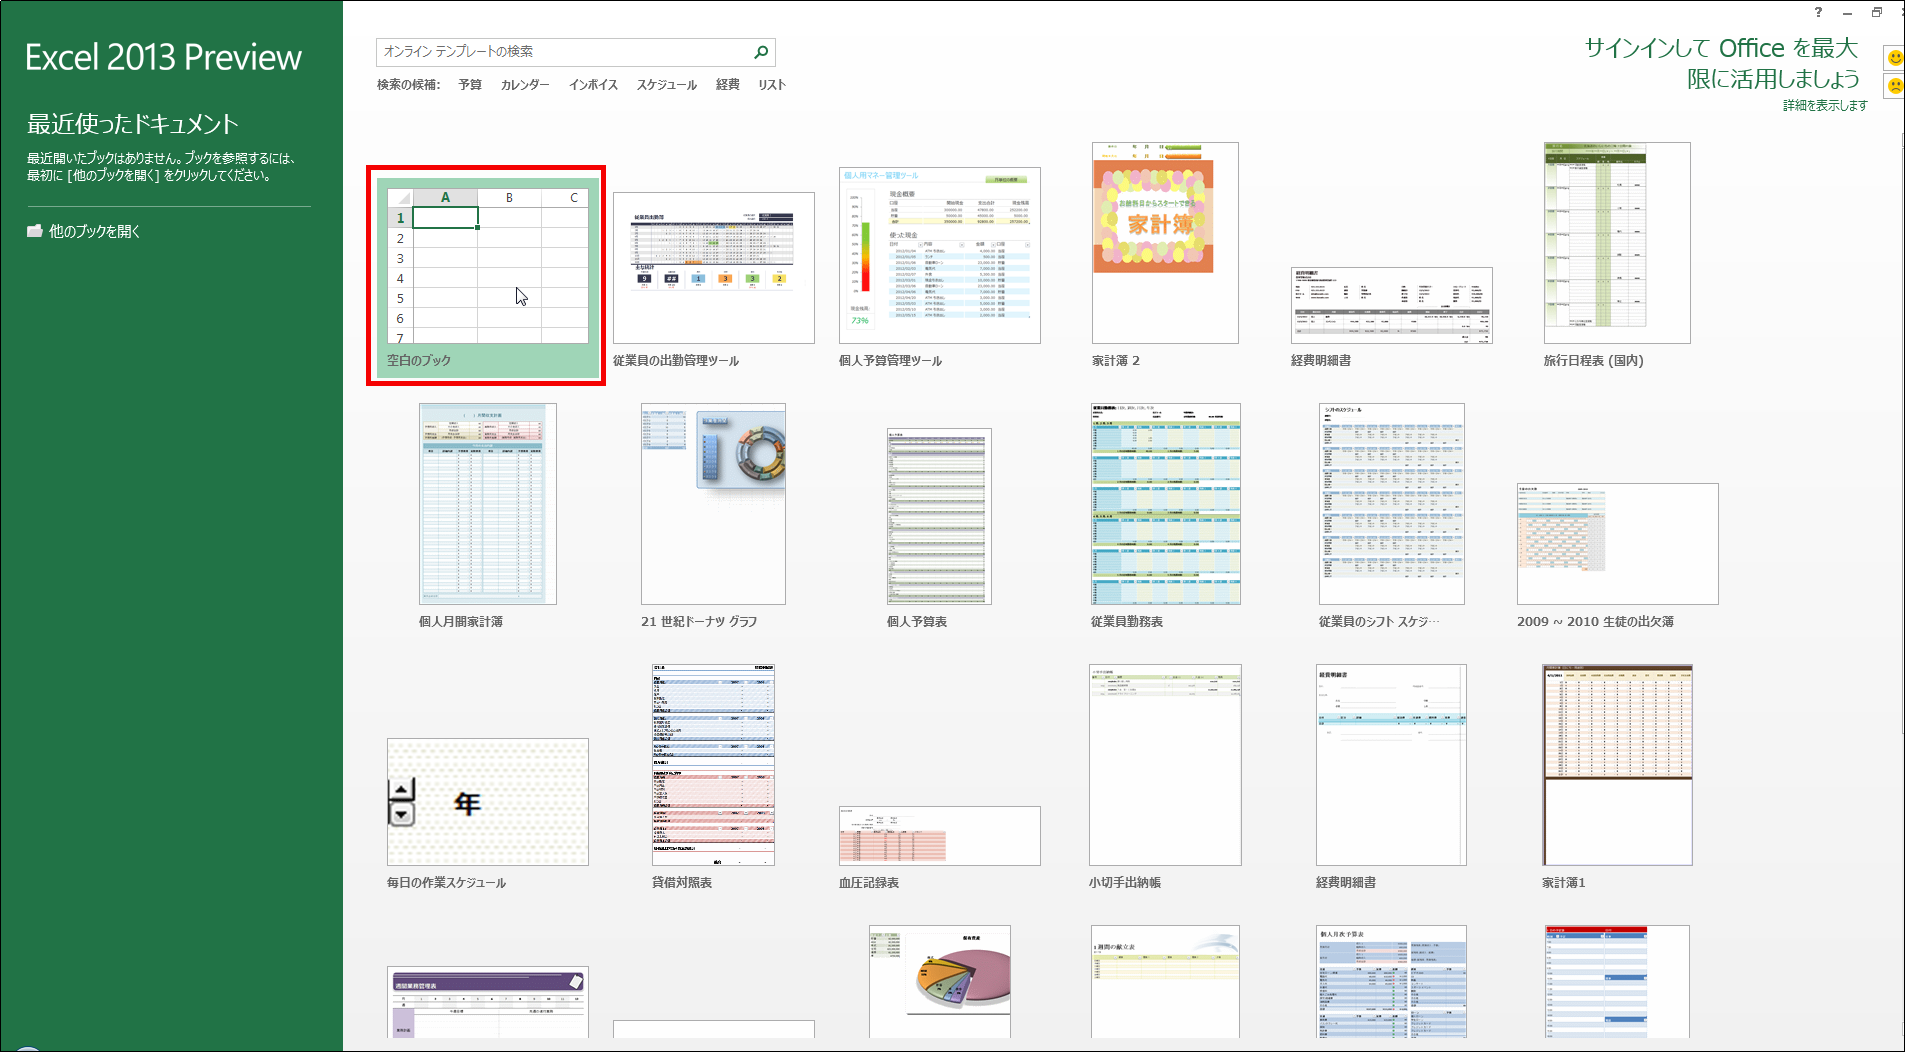 Excel・Word・PowerPointがどれぐらい変わったのか「Office2013」プレビュー版の実際のスクリーンショットで確認レビュー